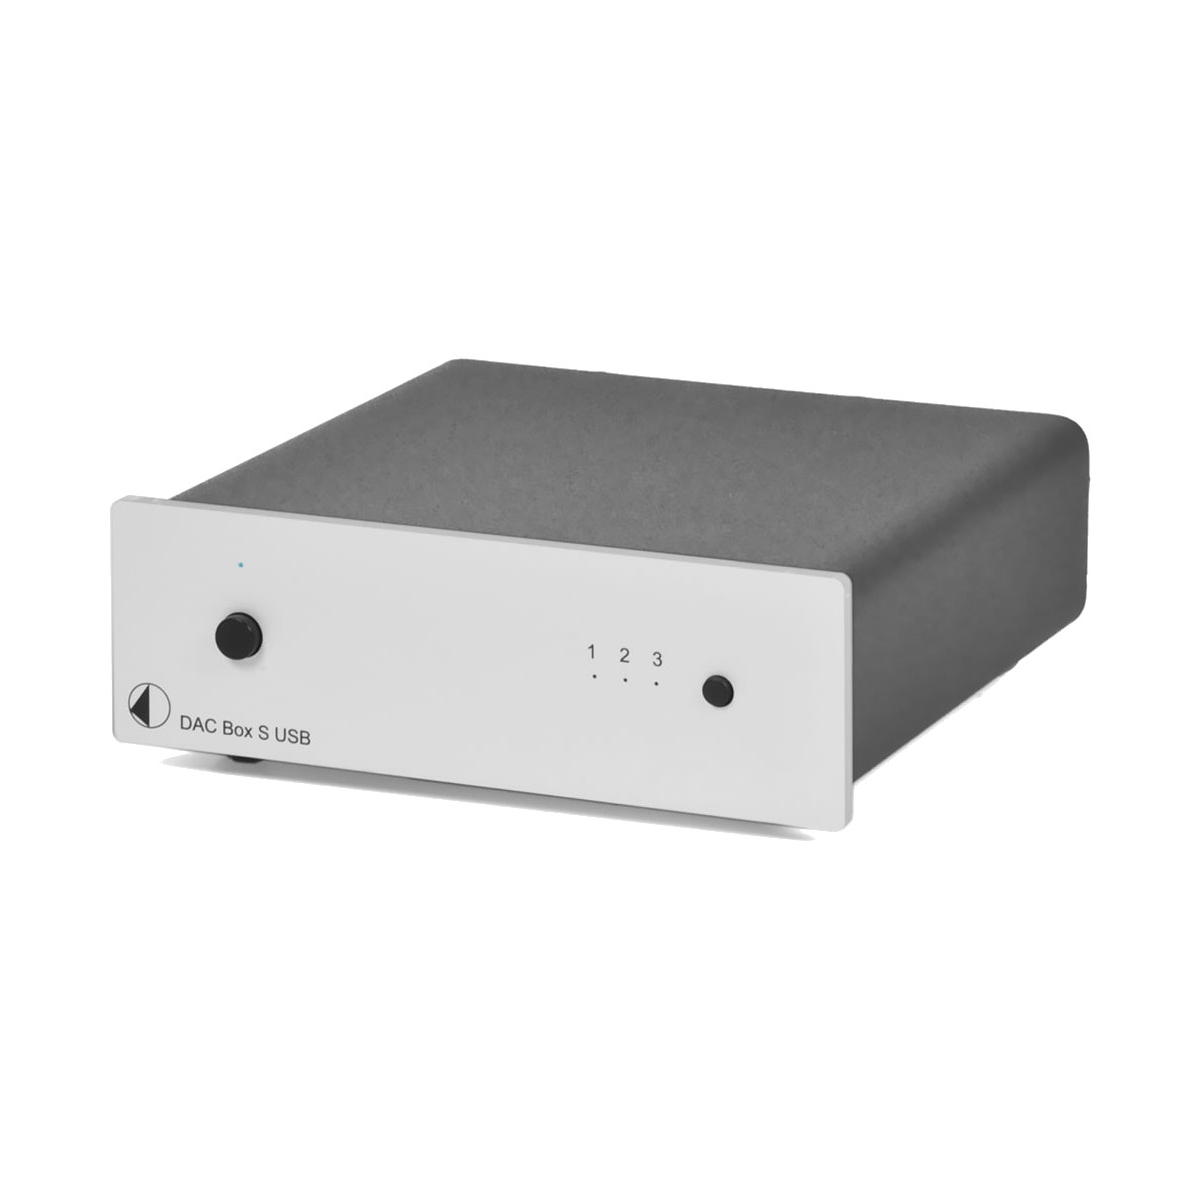 Project Box DAC Box S2 USB, gebraucht, 1 Jahr Garantie